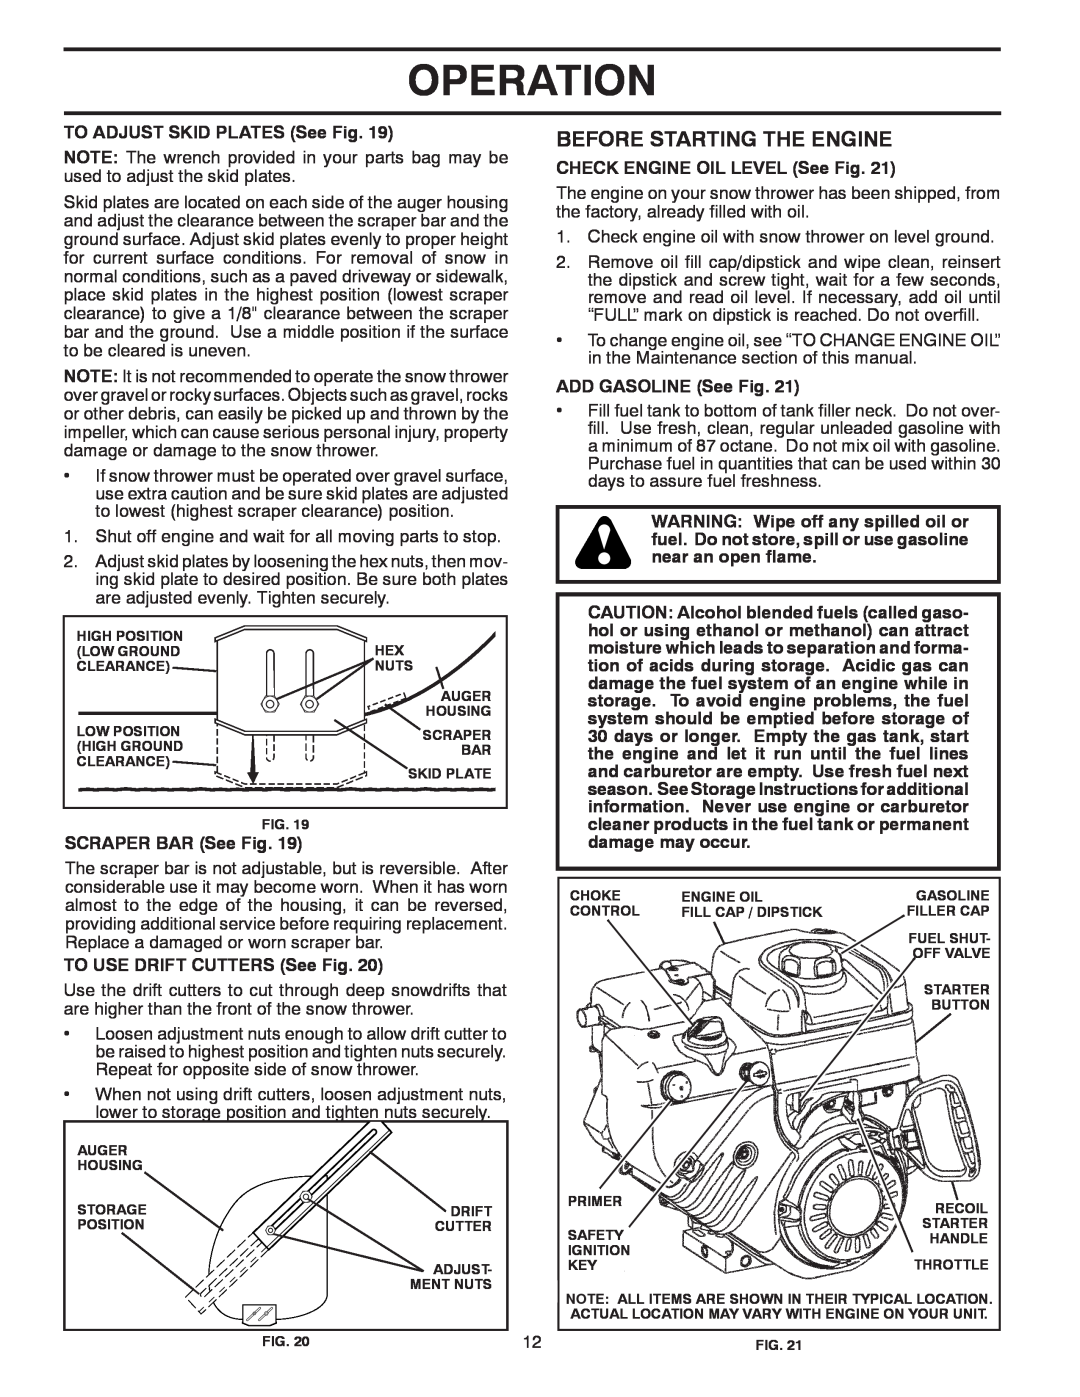 Husqvarna 15530SB-LS manual Before Starting The Engine, Operation, TO ADJUST SKID PLATES See Fig, SCRAPER BAR See Fig 